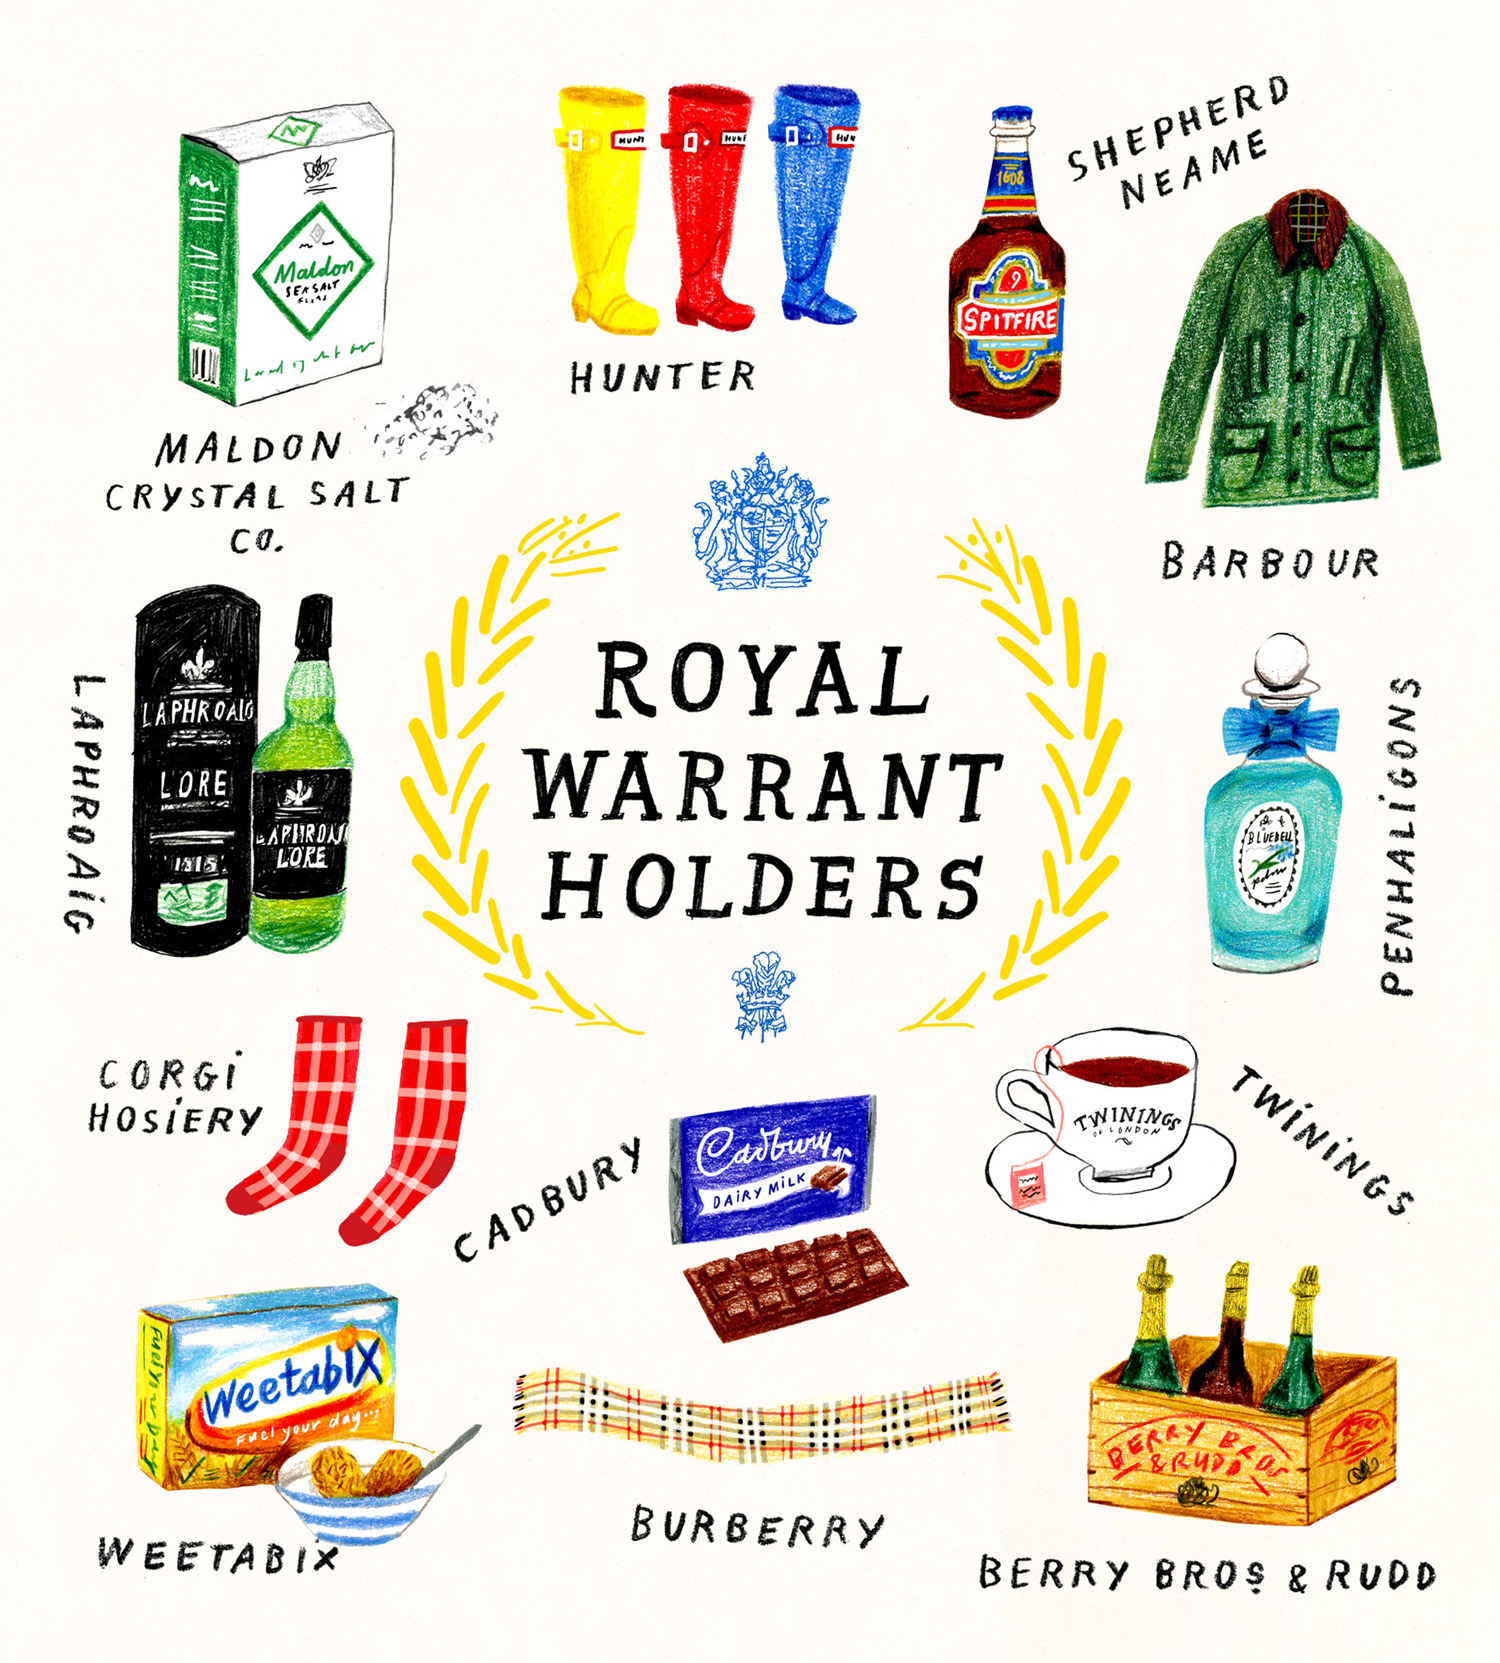 Nina Cosford Illustration - royal warrant holders visit britain